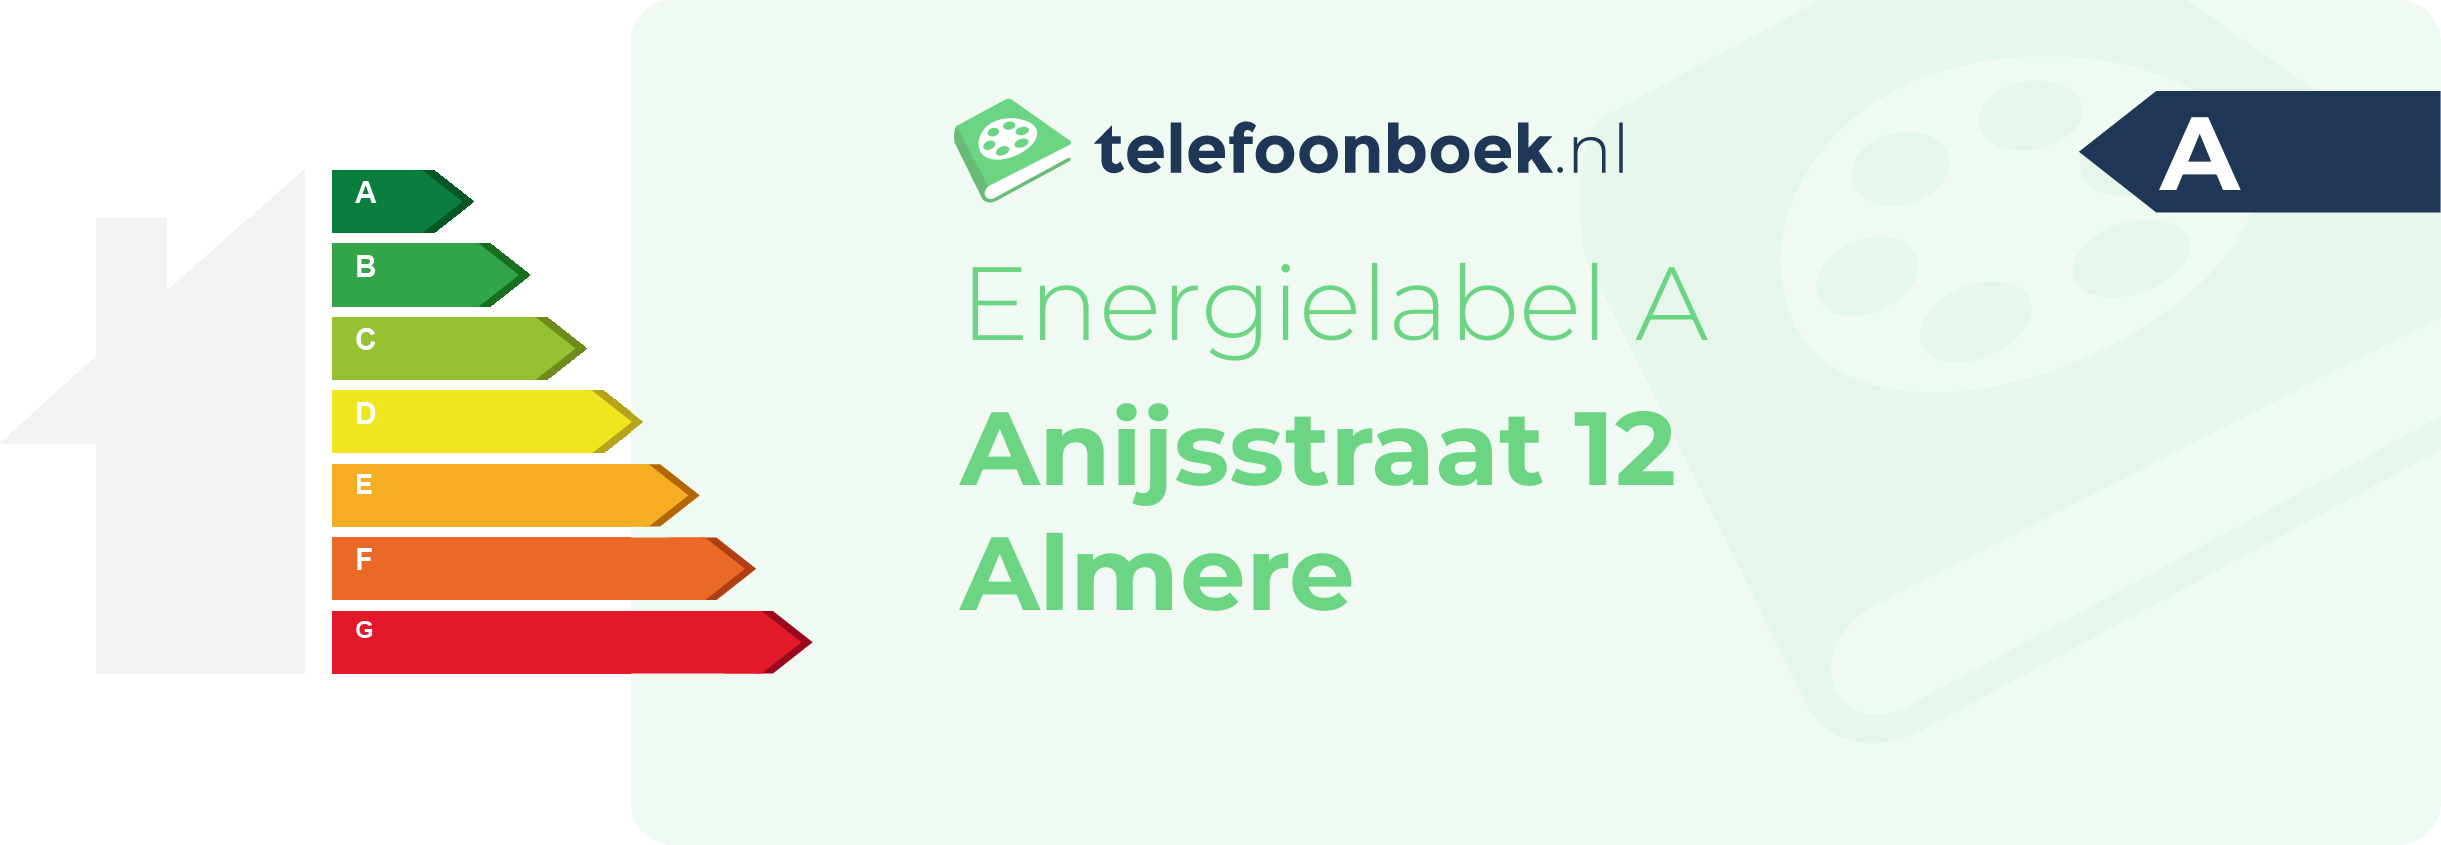 Energielabel Anijsstraat 12 Almere